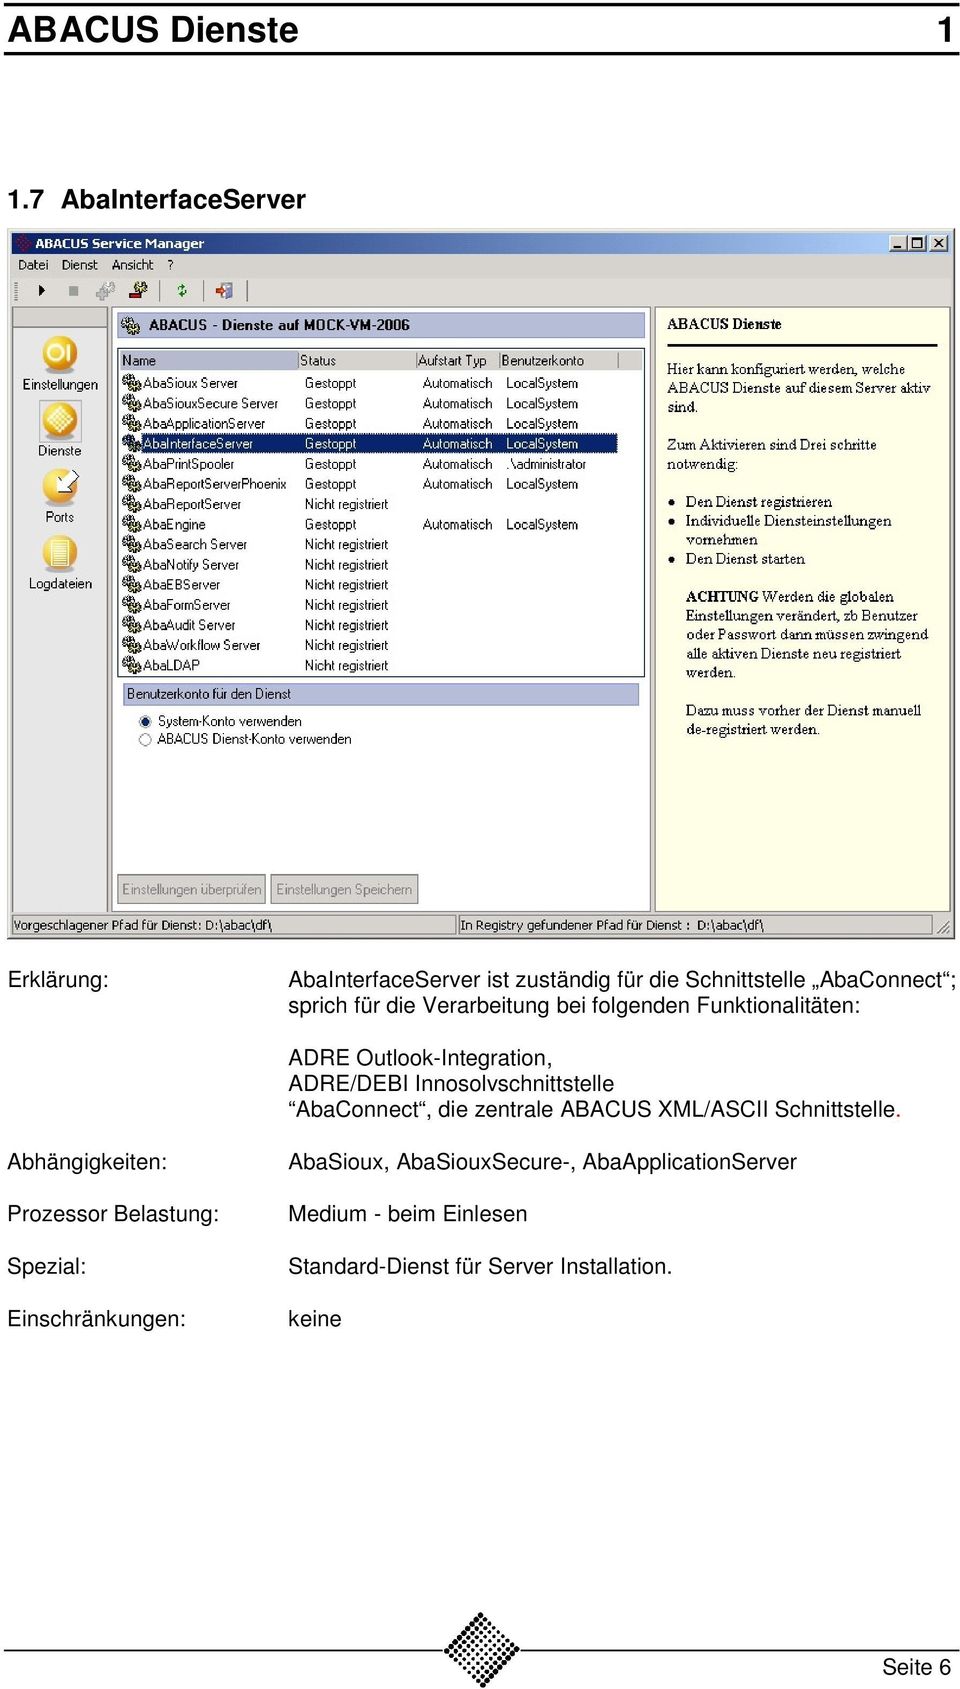 Innosolvschnittstelle AbaConnect, die zentrale ABACUS XML/ASCII Schnittstelle.